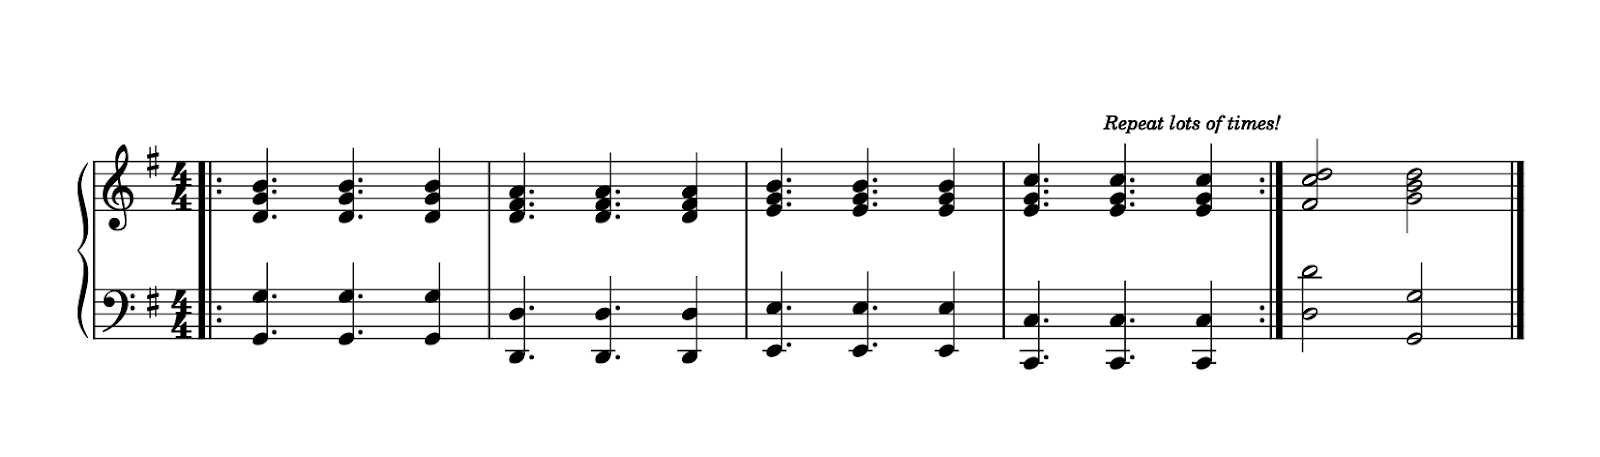 teaching piano scales using improv